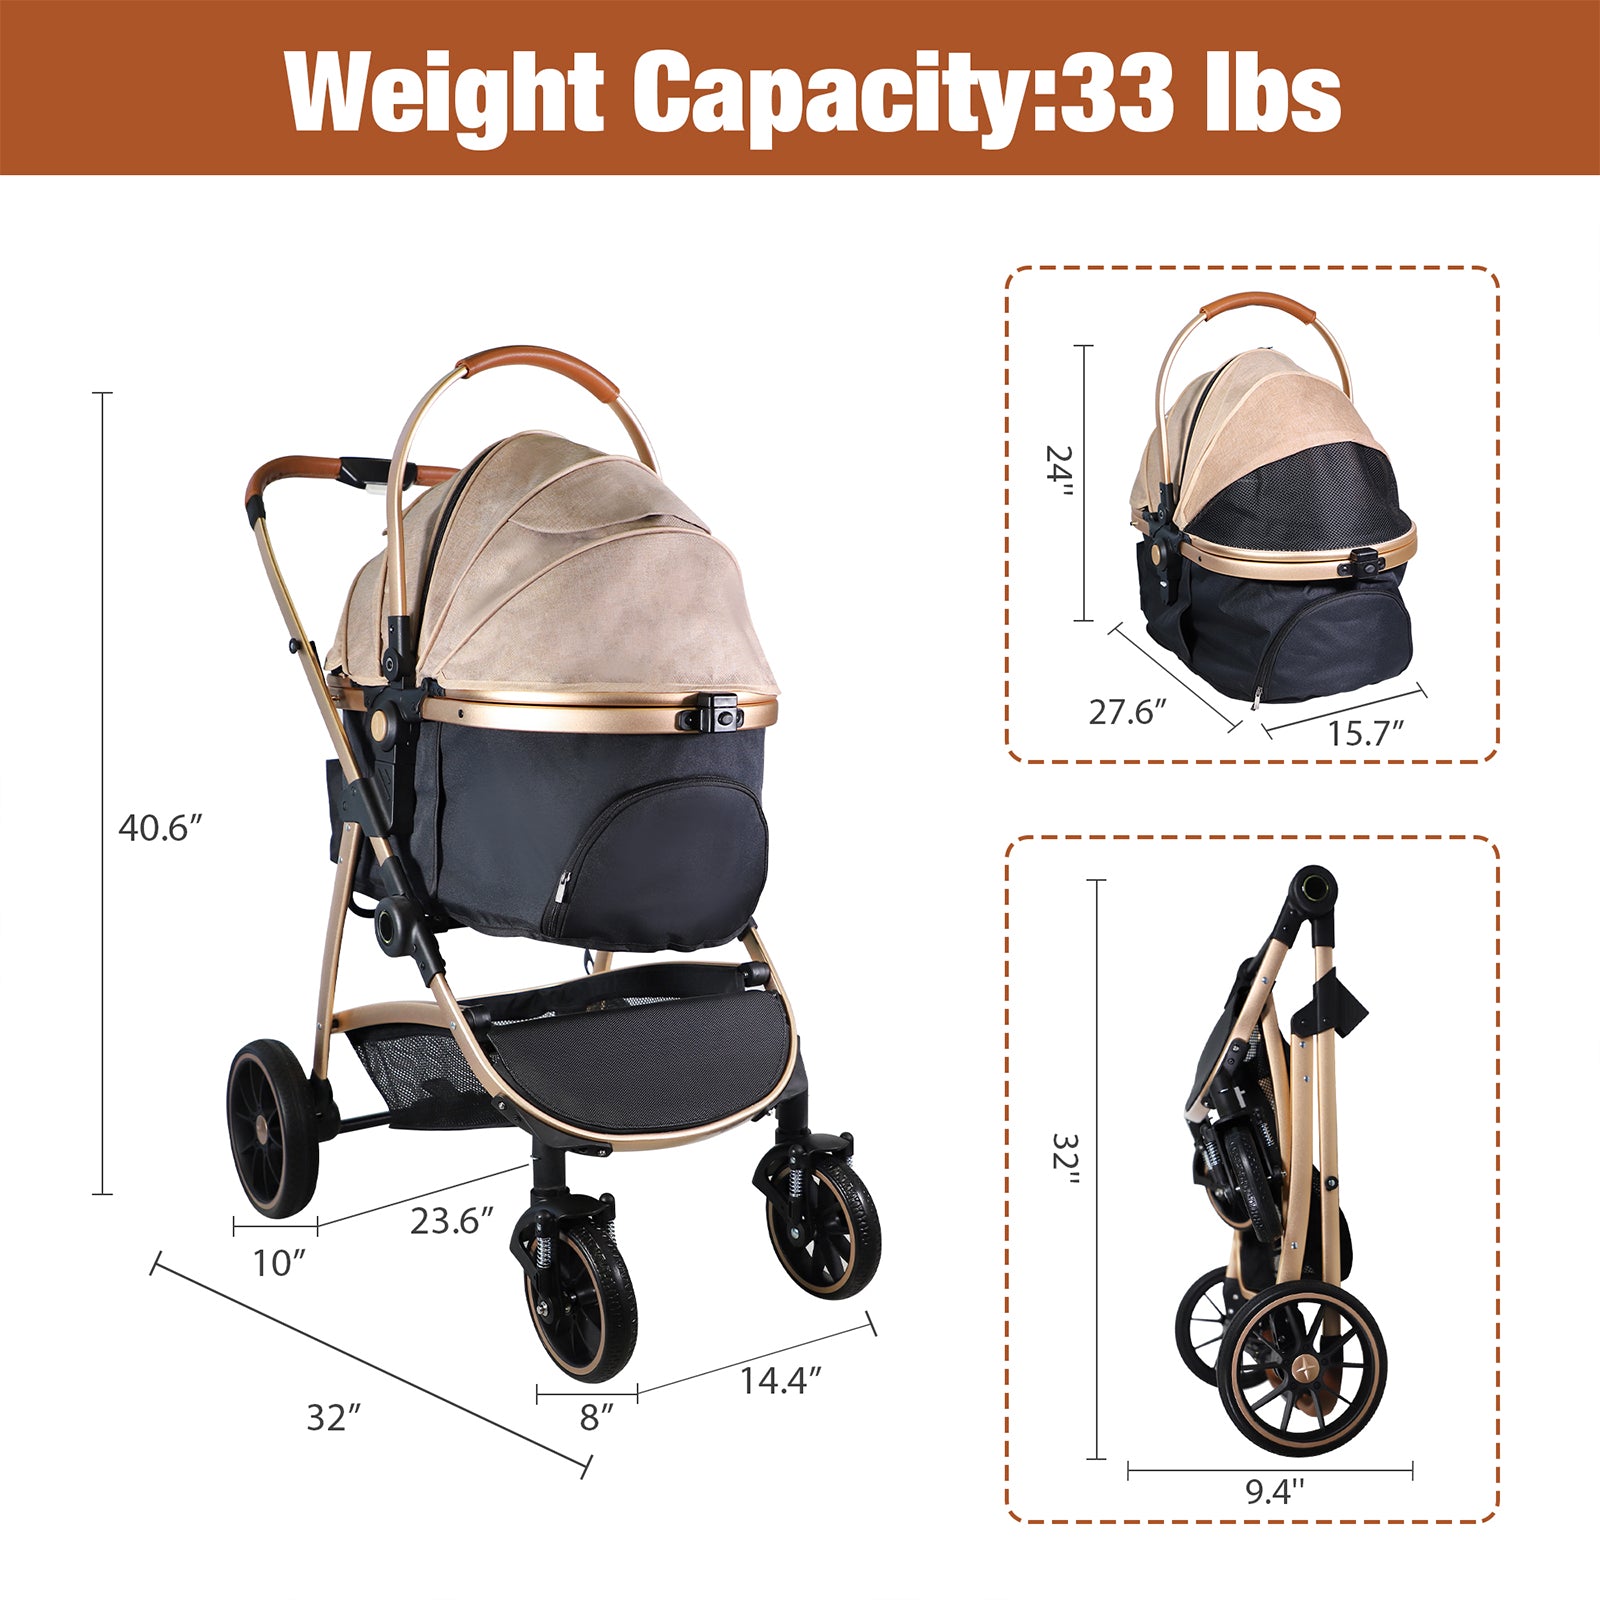 3 in 1 Travel Dog Stroller Pet Carrier with Detachable Carrier & Adjustable Handle, Gold